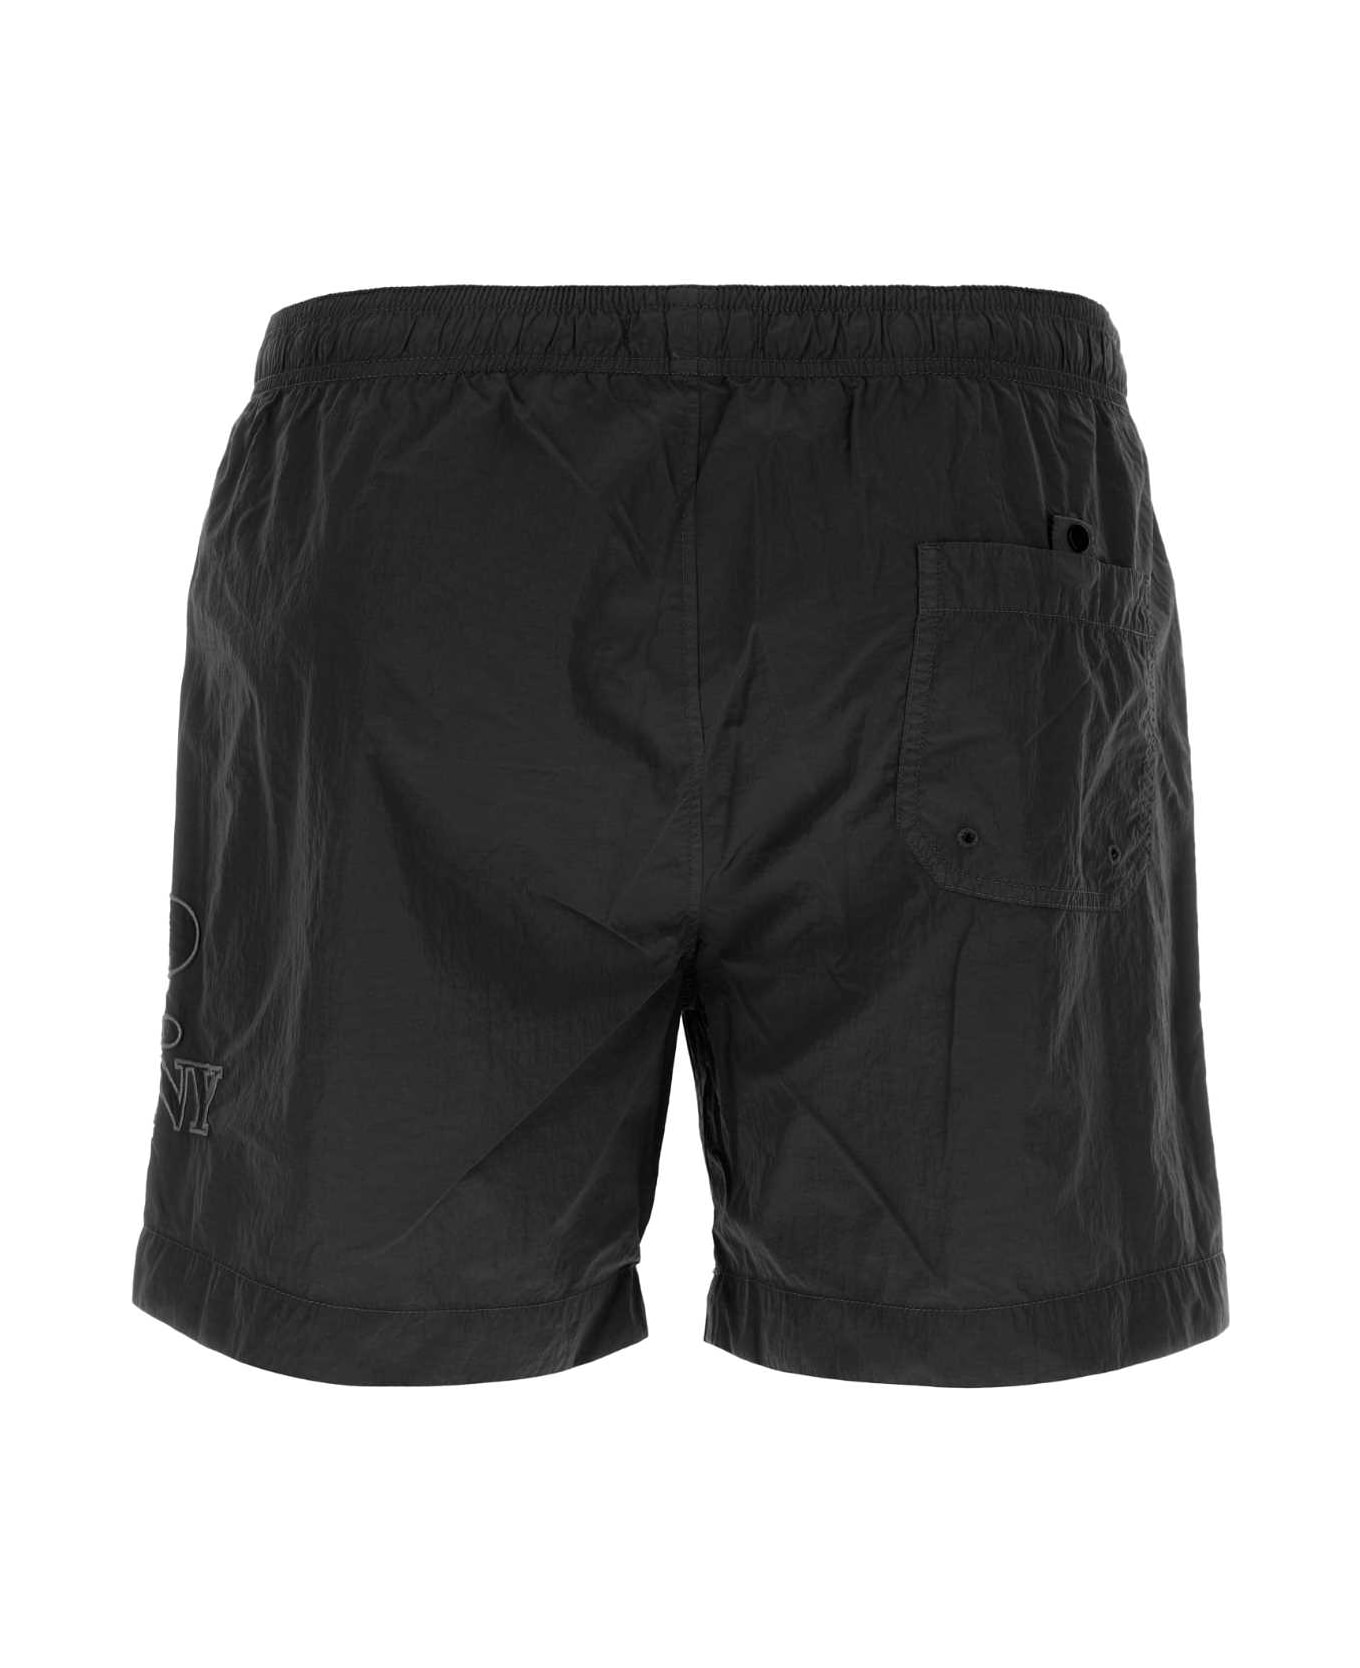 C.P. Company Black Nylon Swimming Shorts - Black